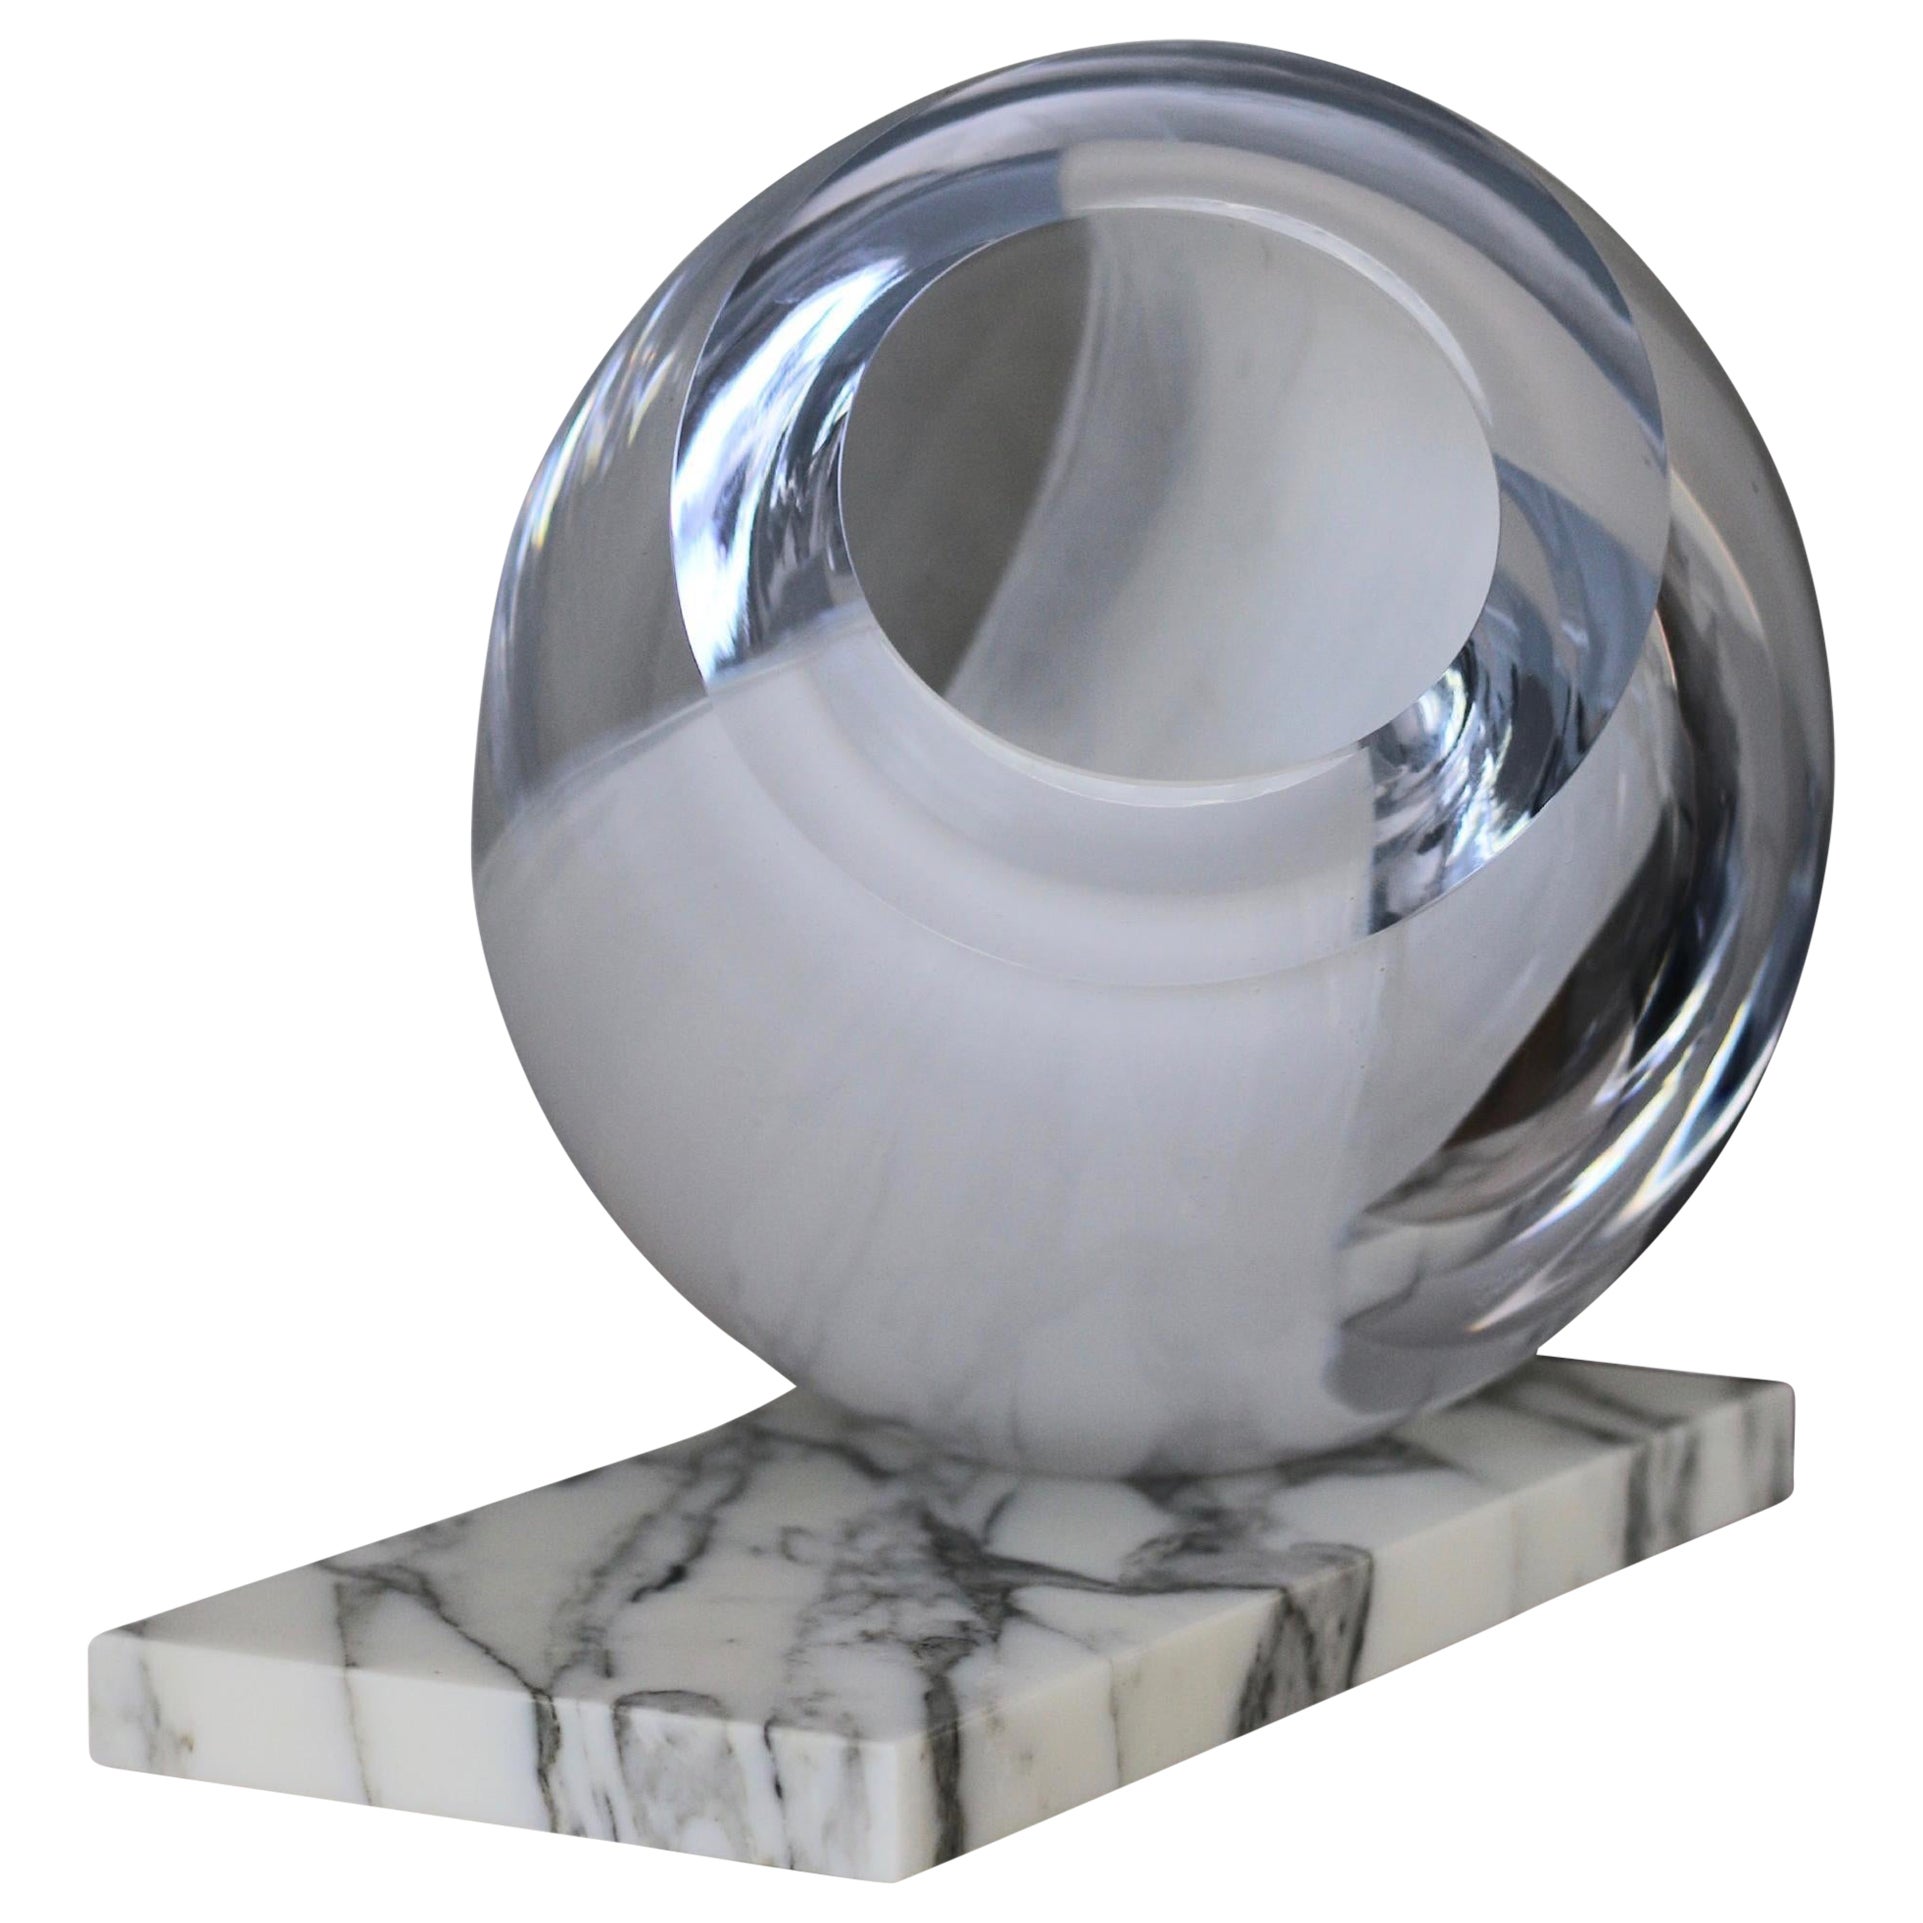 Grand vase « Newborn » en verre et marbre blanc